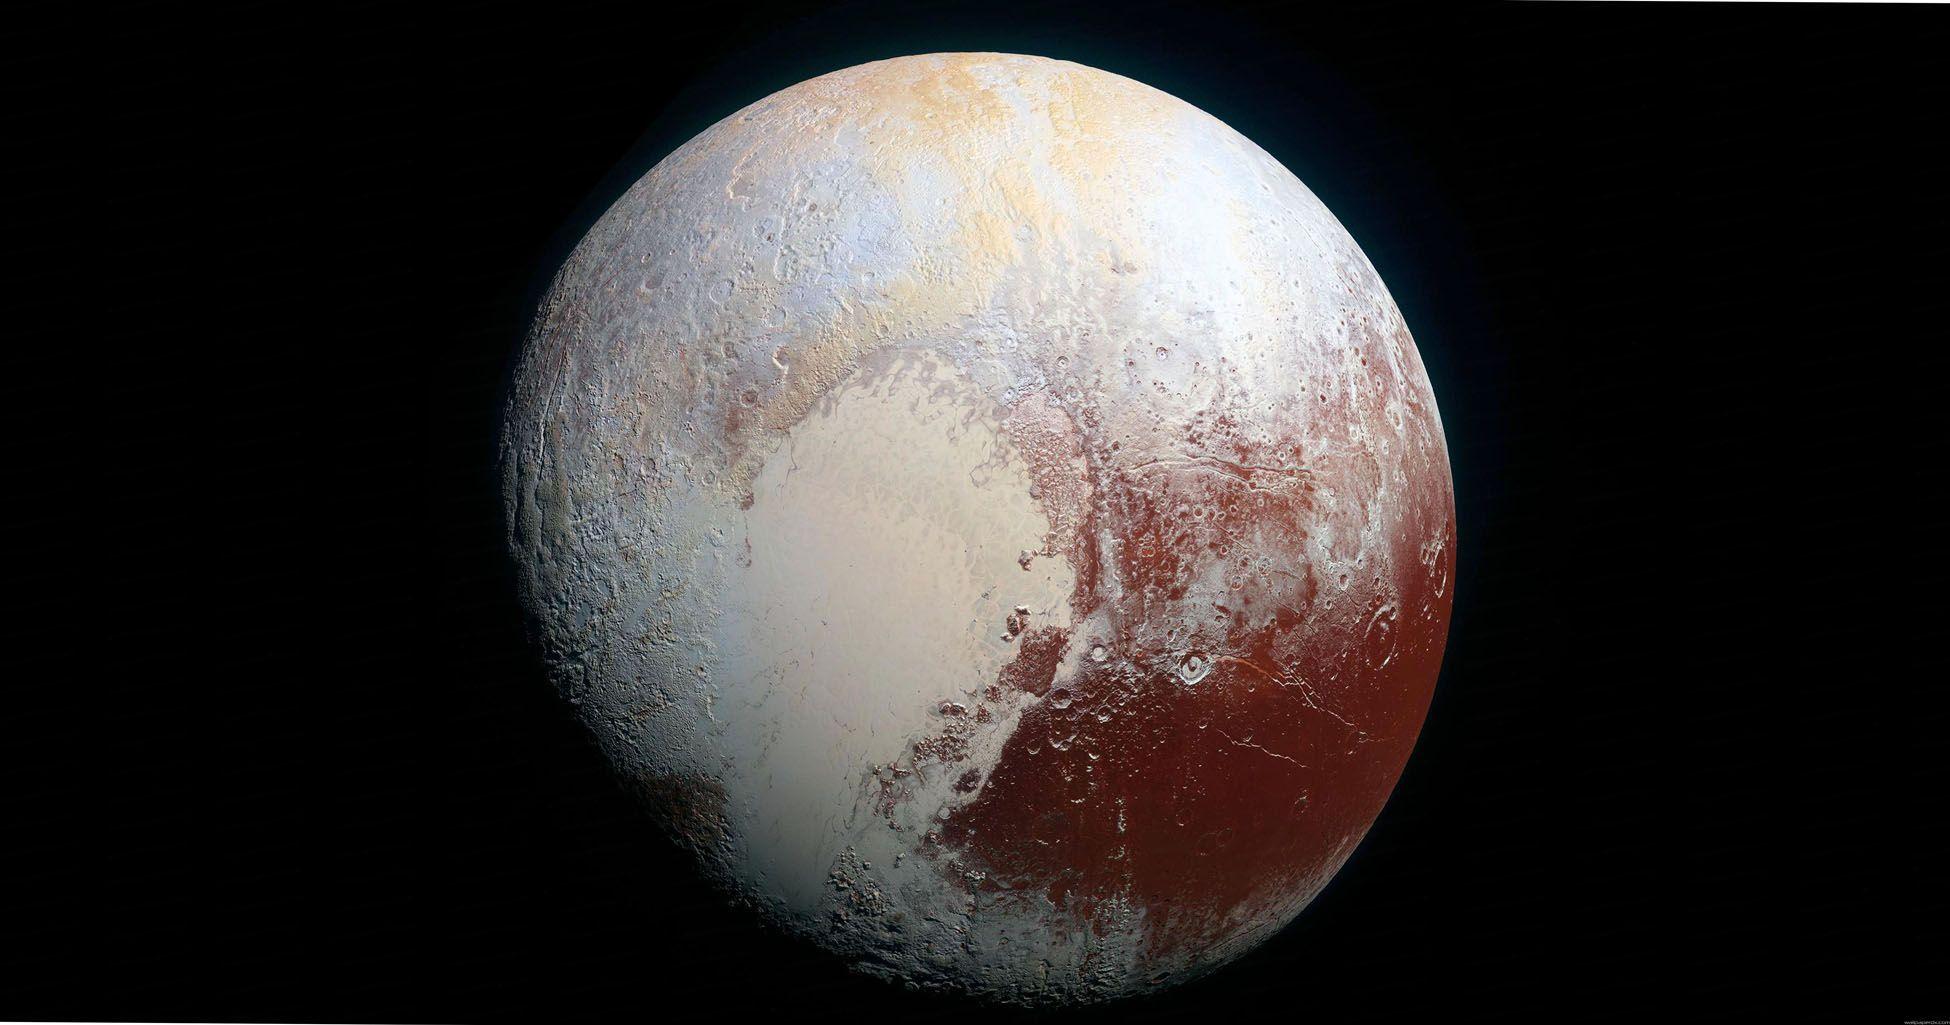 HD wallpaper 80k Pluto cosmic planet wallpaper Space nasa new horizons   Wallpaper Flare